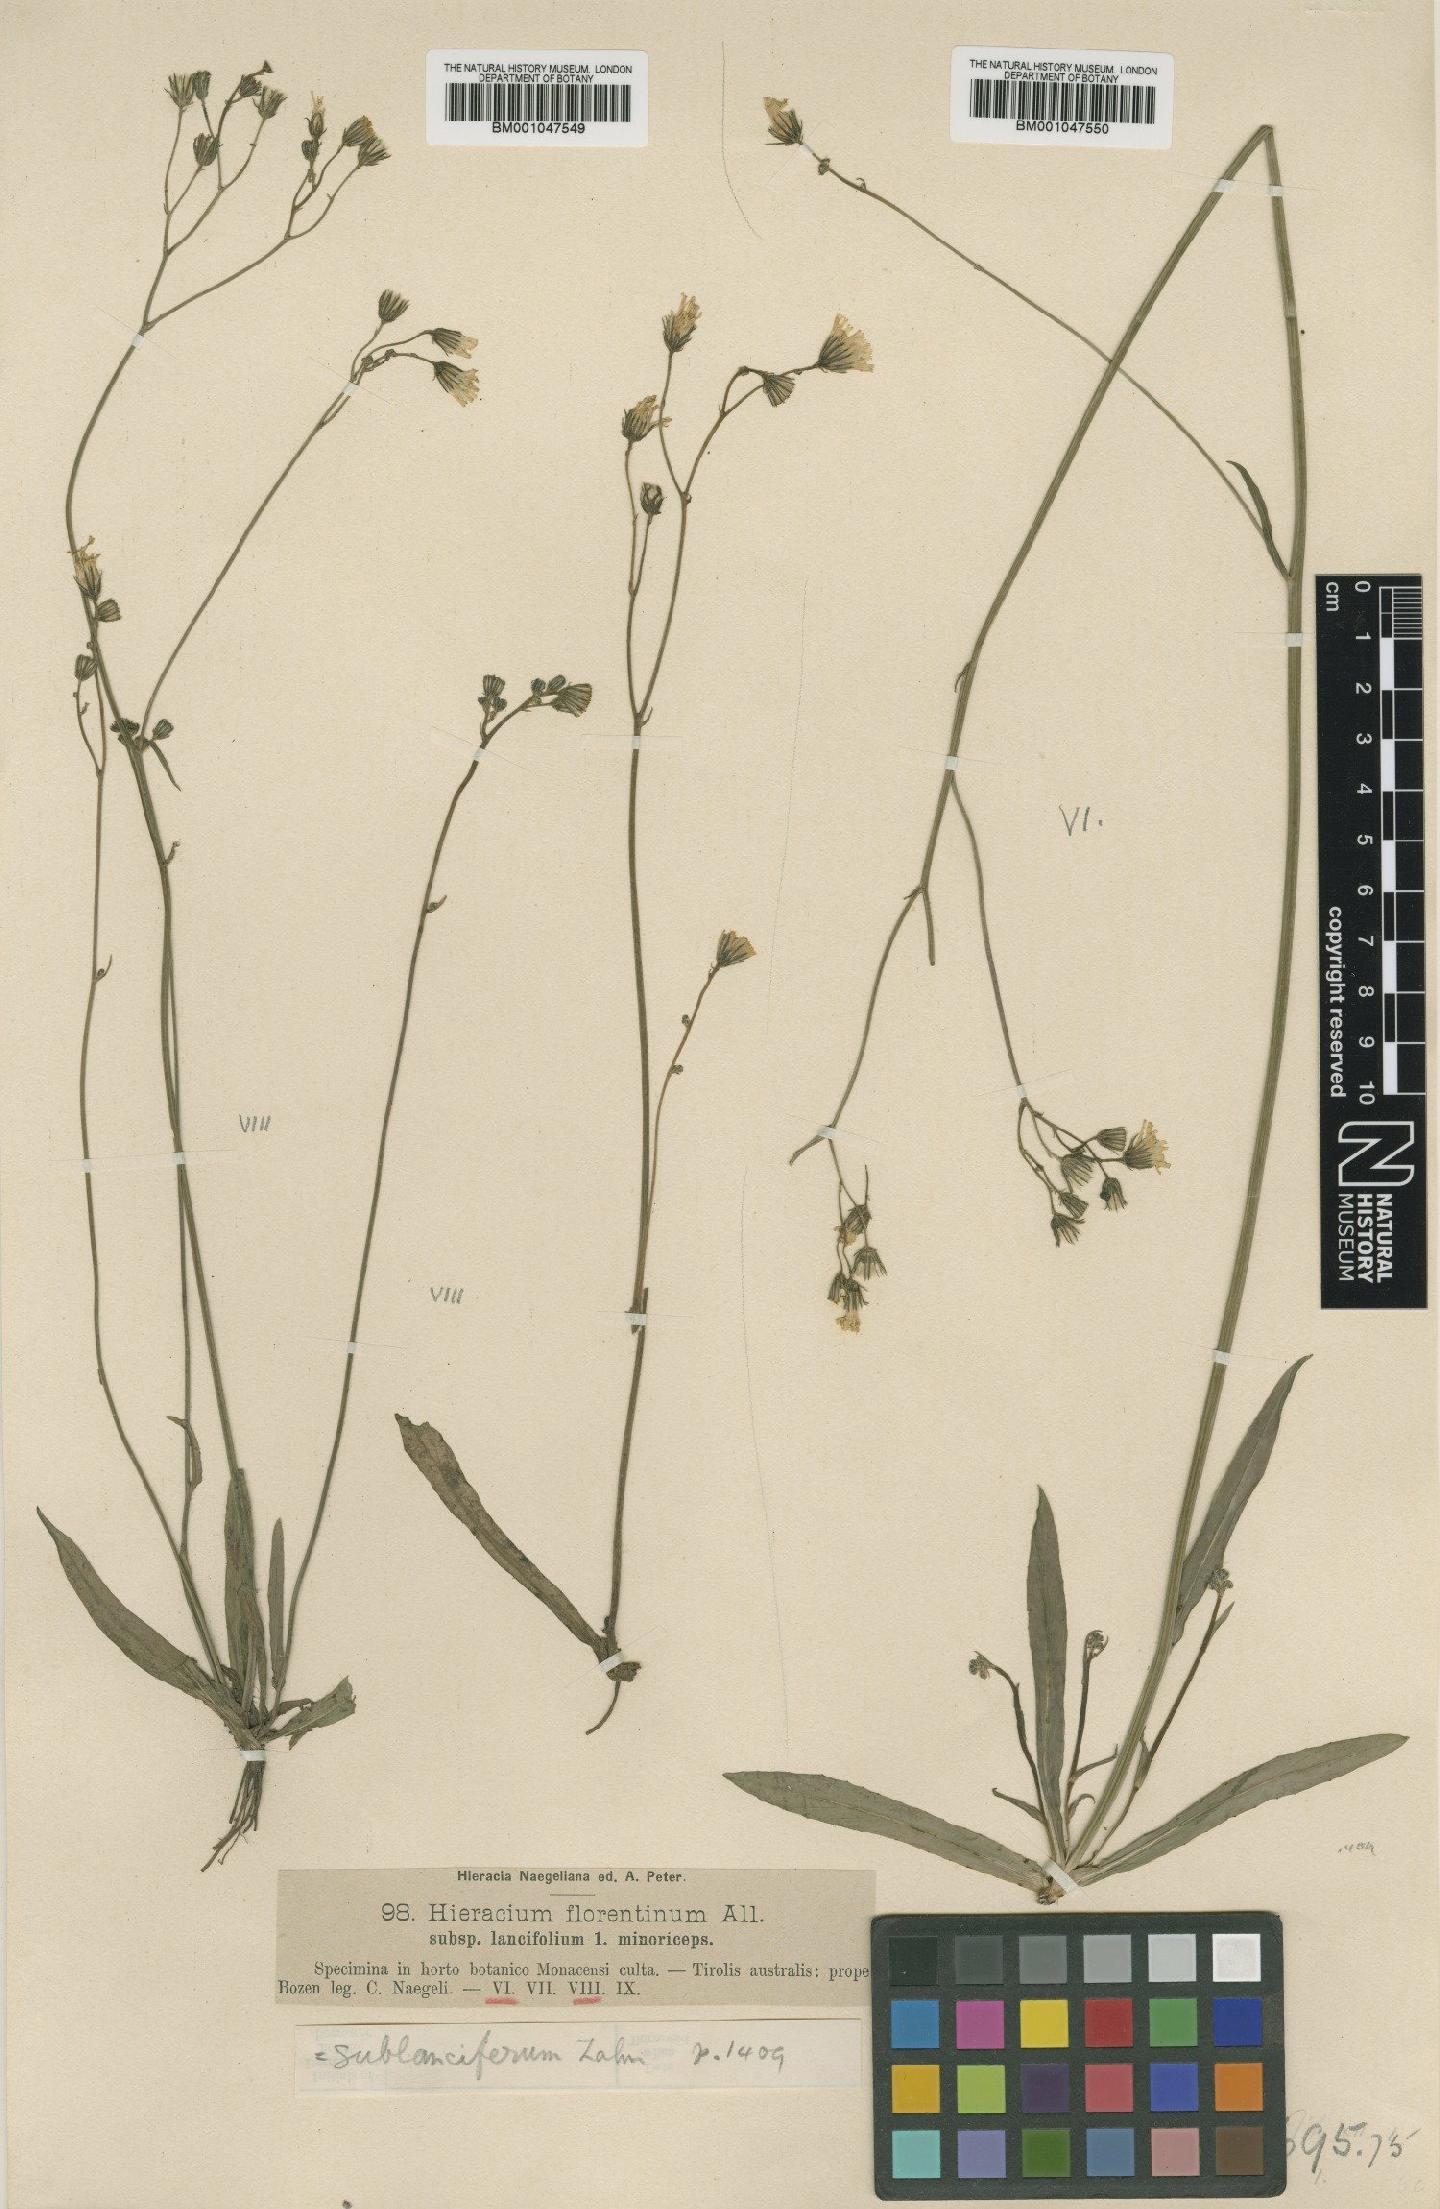 To NHMUK collection (Hieracium florentinum subsp. sublanciferum Zahn; NHMUK:ecatalogue:2768142)